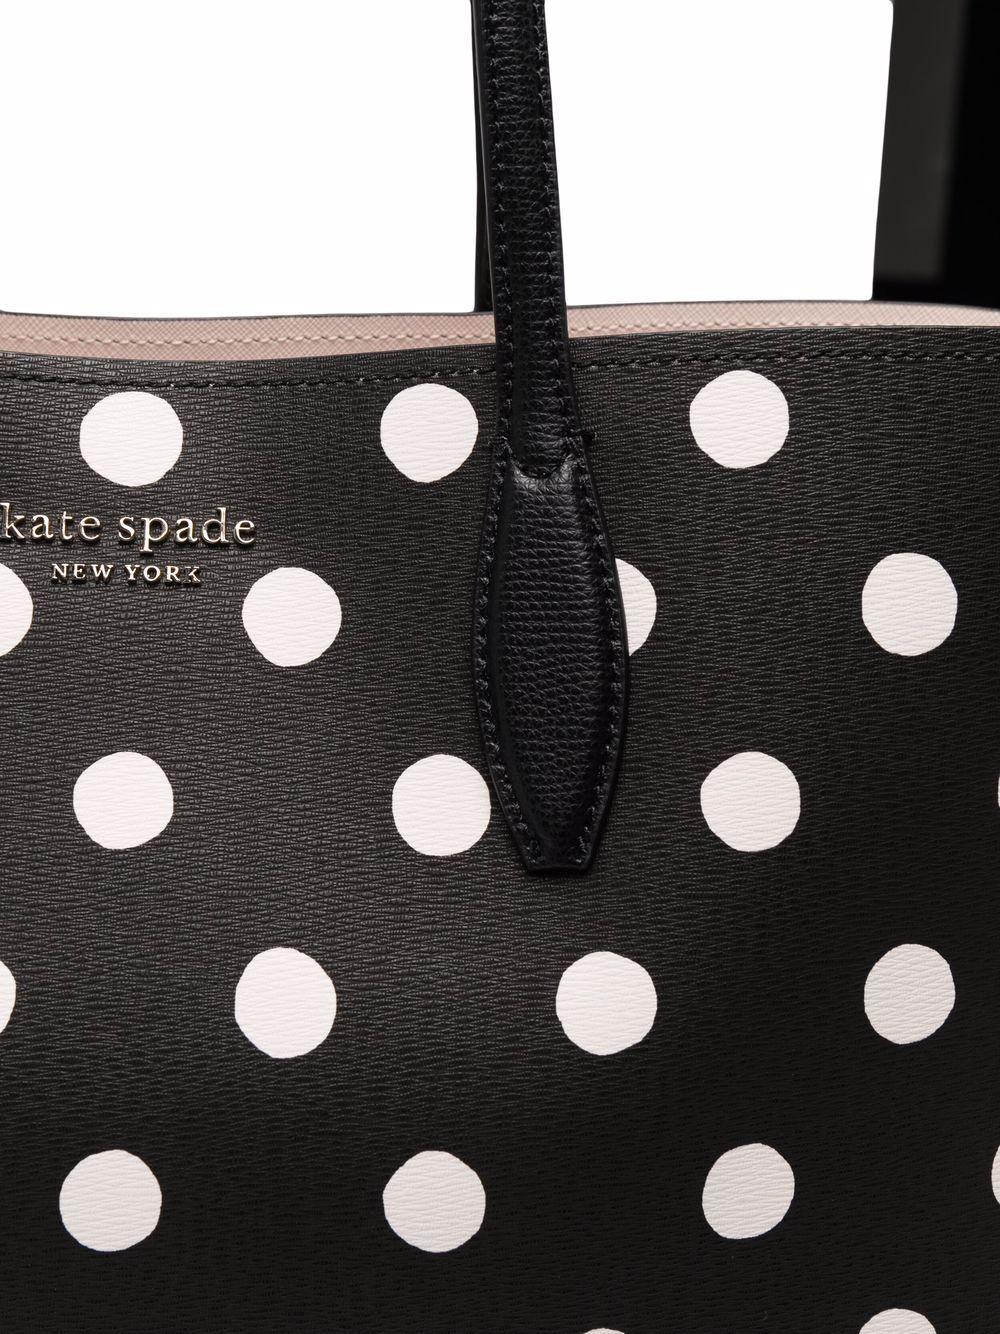 NWT Kate Spade Polka Dot Canvas Tote Bag Black/White